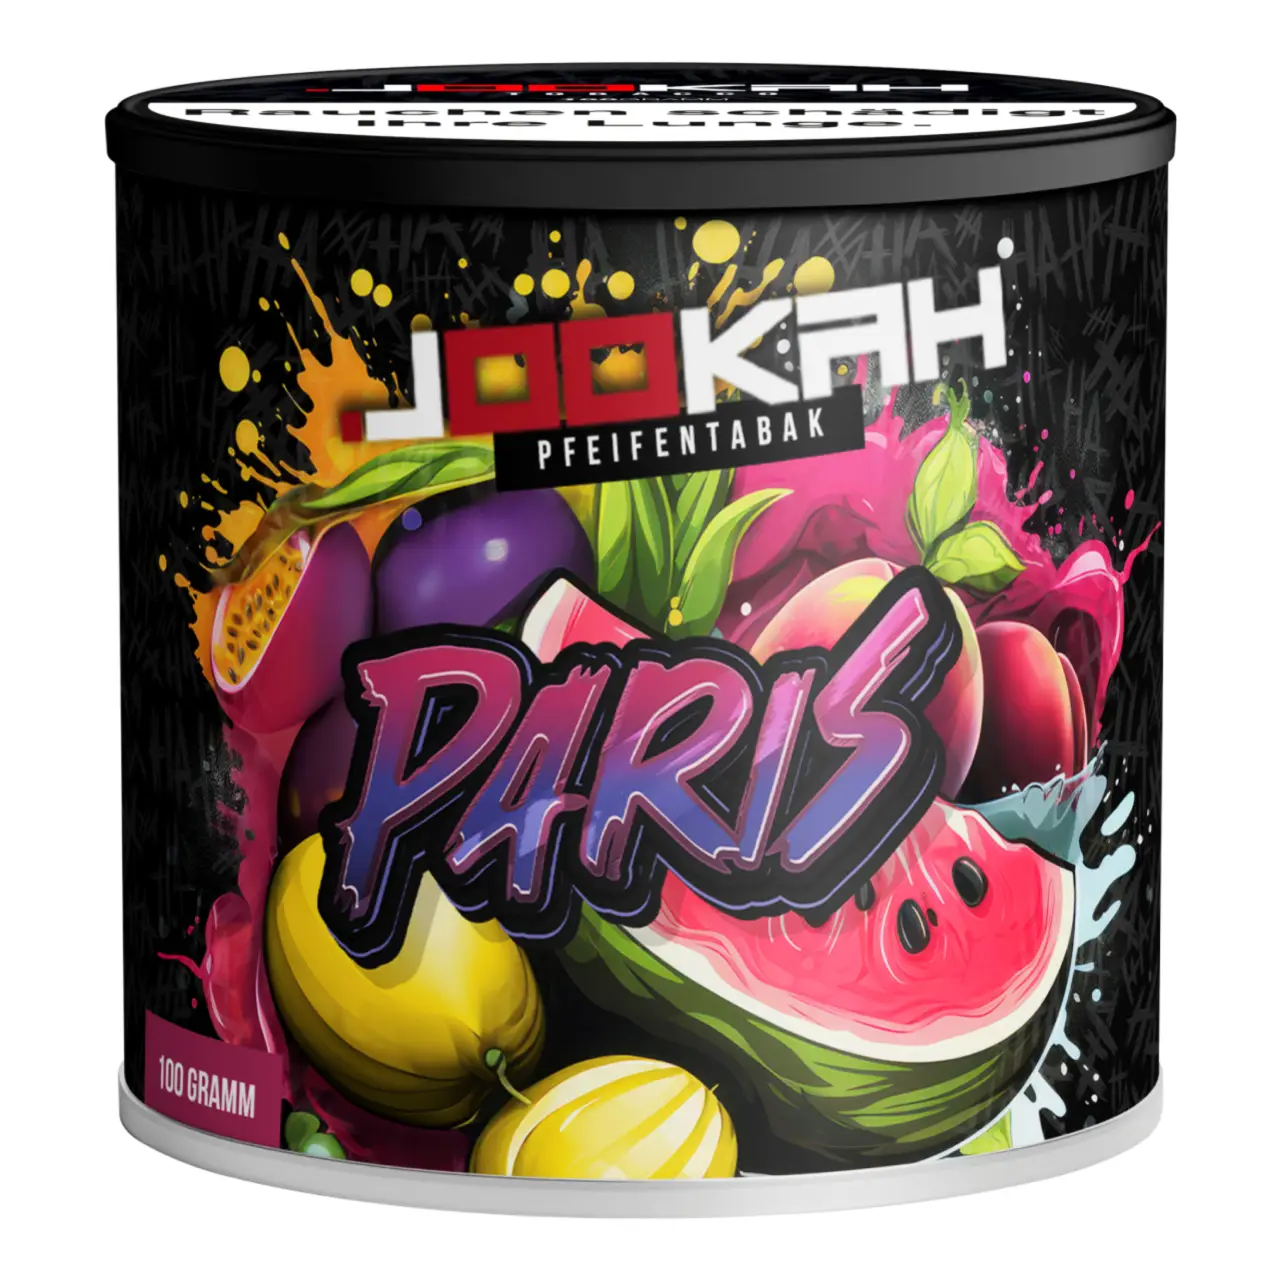 Jookah Pfeifentabak Paris - Wassermelone Honigmelone Maracuja Pfirsich - 100g